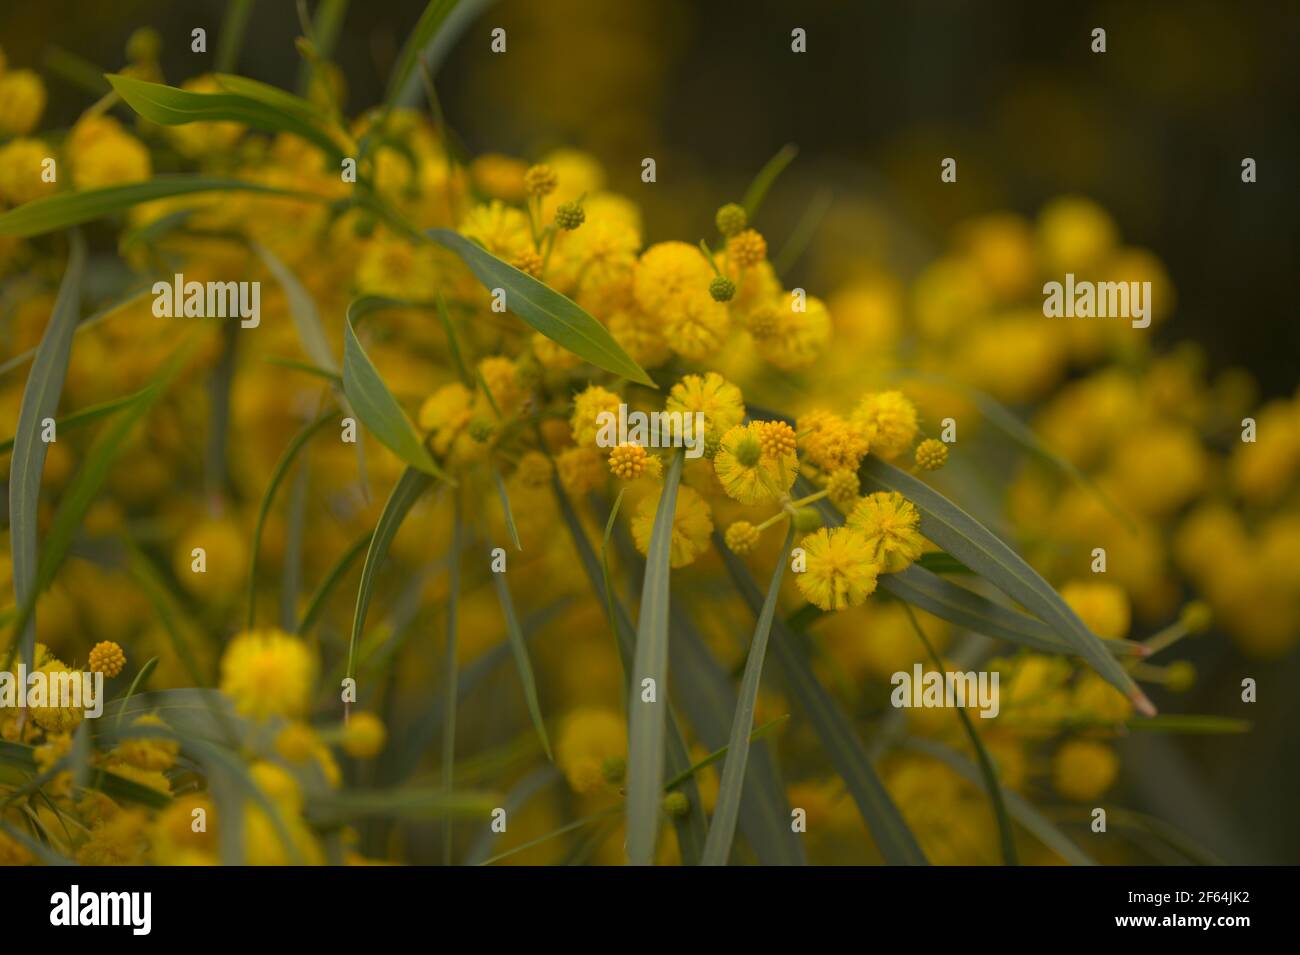 Flora of Gran Canaria - Acacia saligna aka golden wreath wattle, introduced invasive plant natural macro floral background Stock Photo